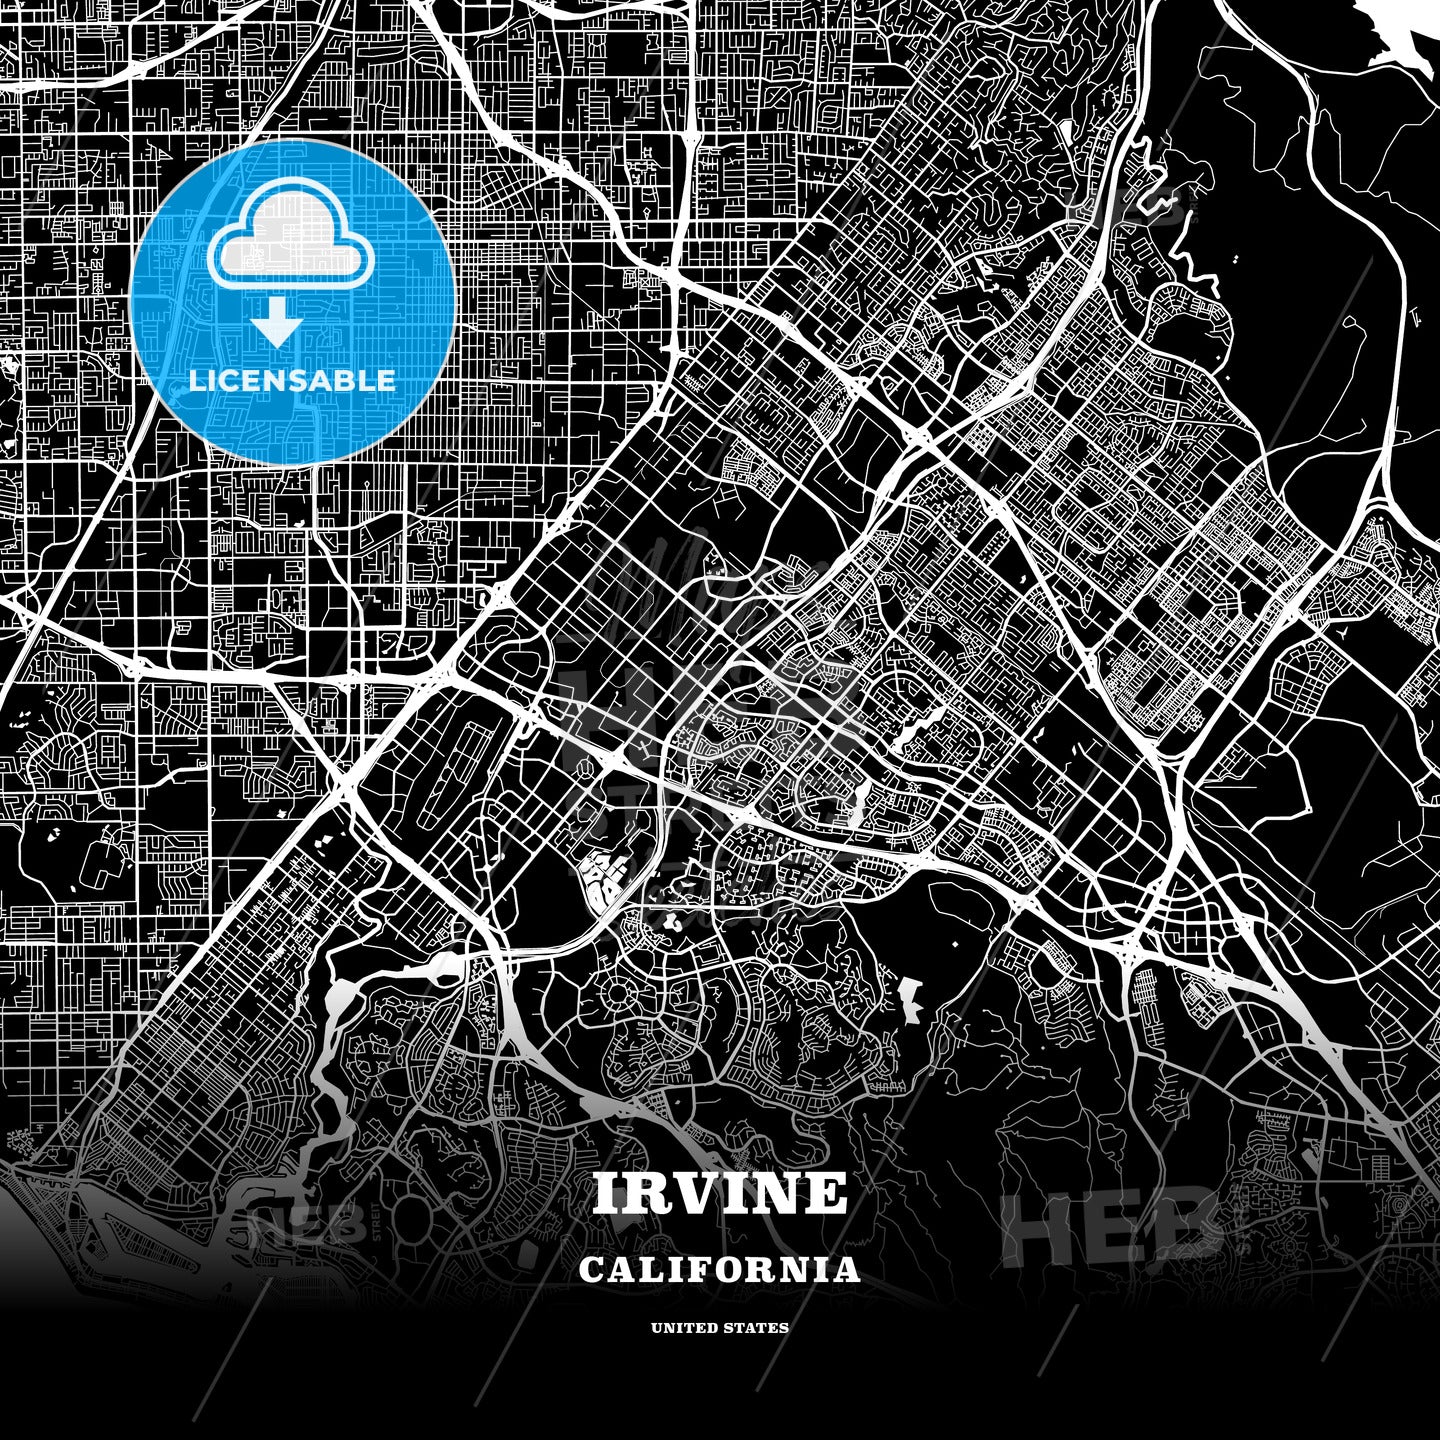 Irvine, California, USA map